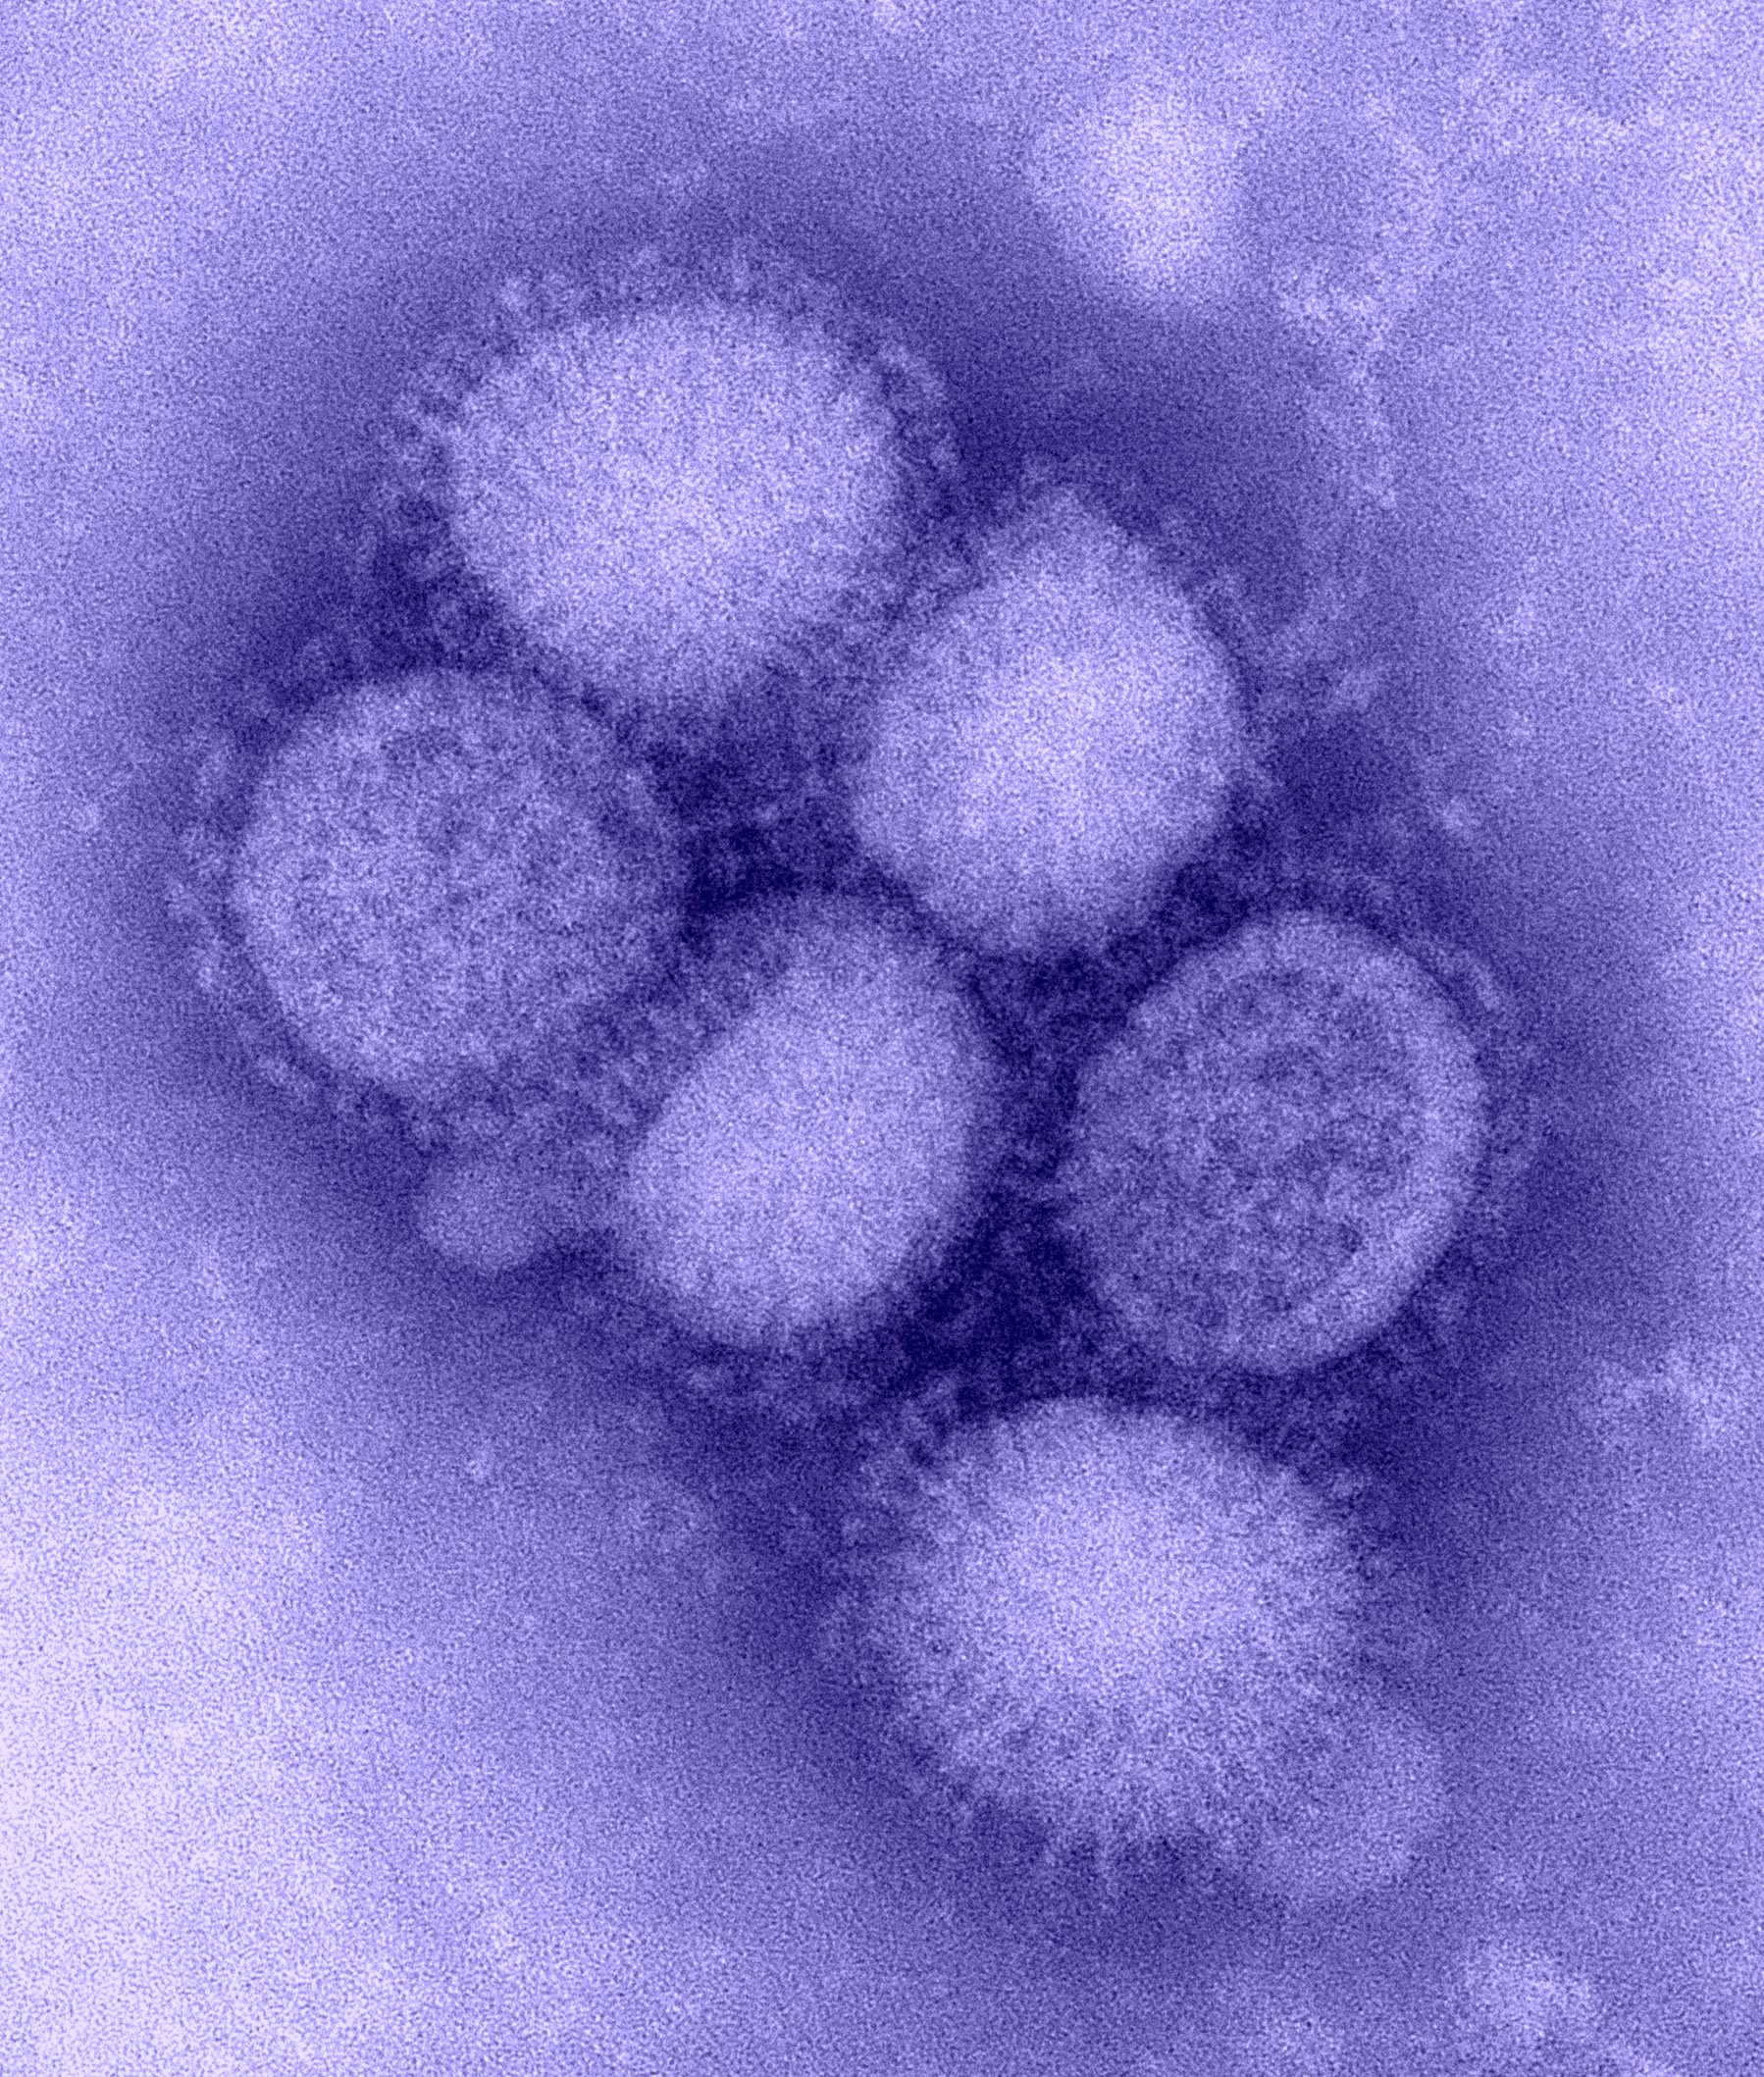 H1N1 influenza virus.